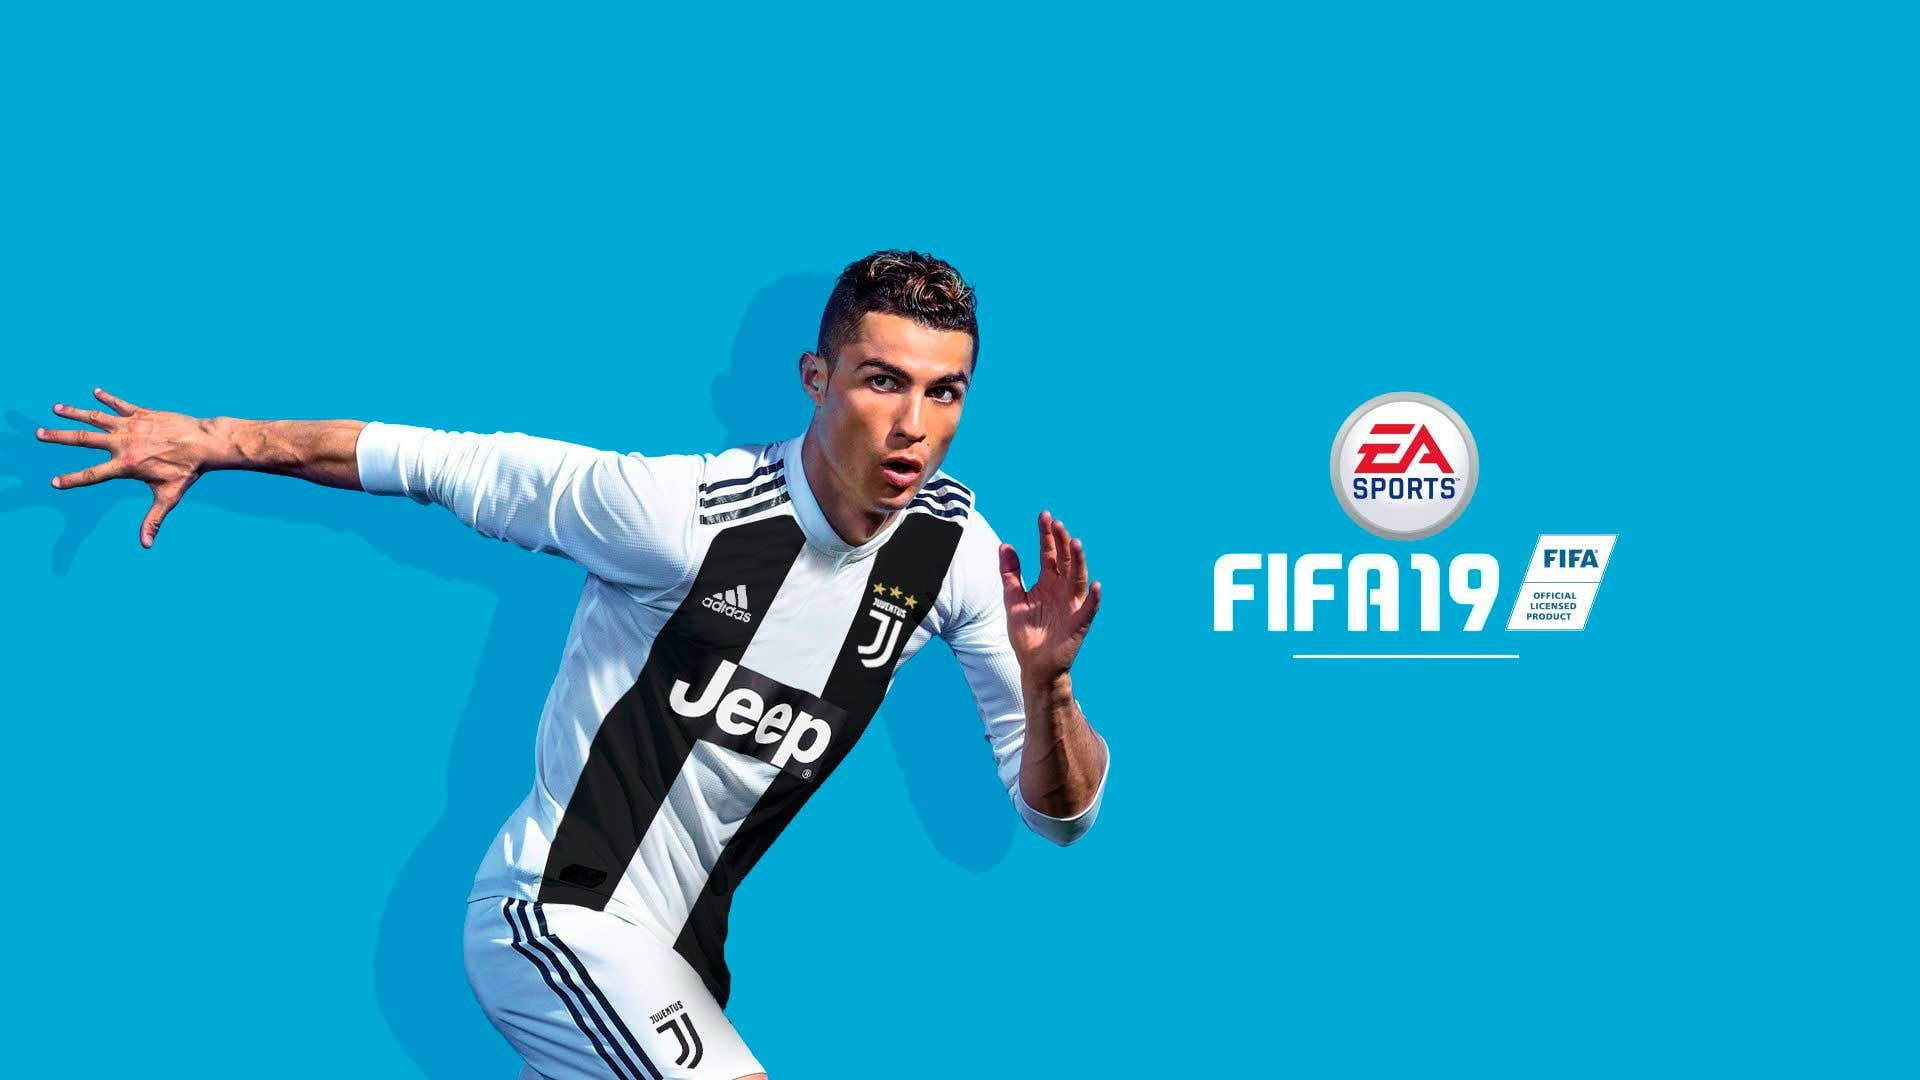 Video Game FIFA 19 wallpaper, Ronaldo